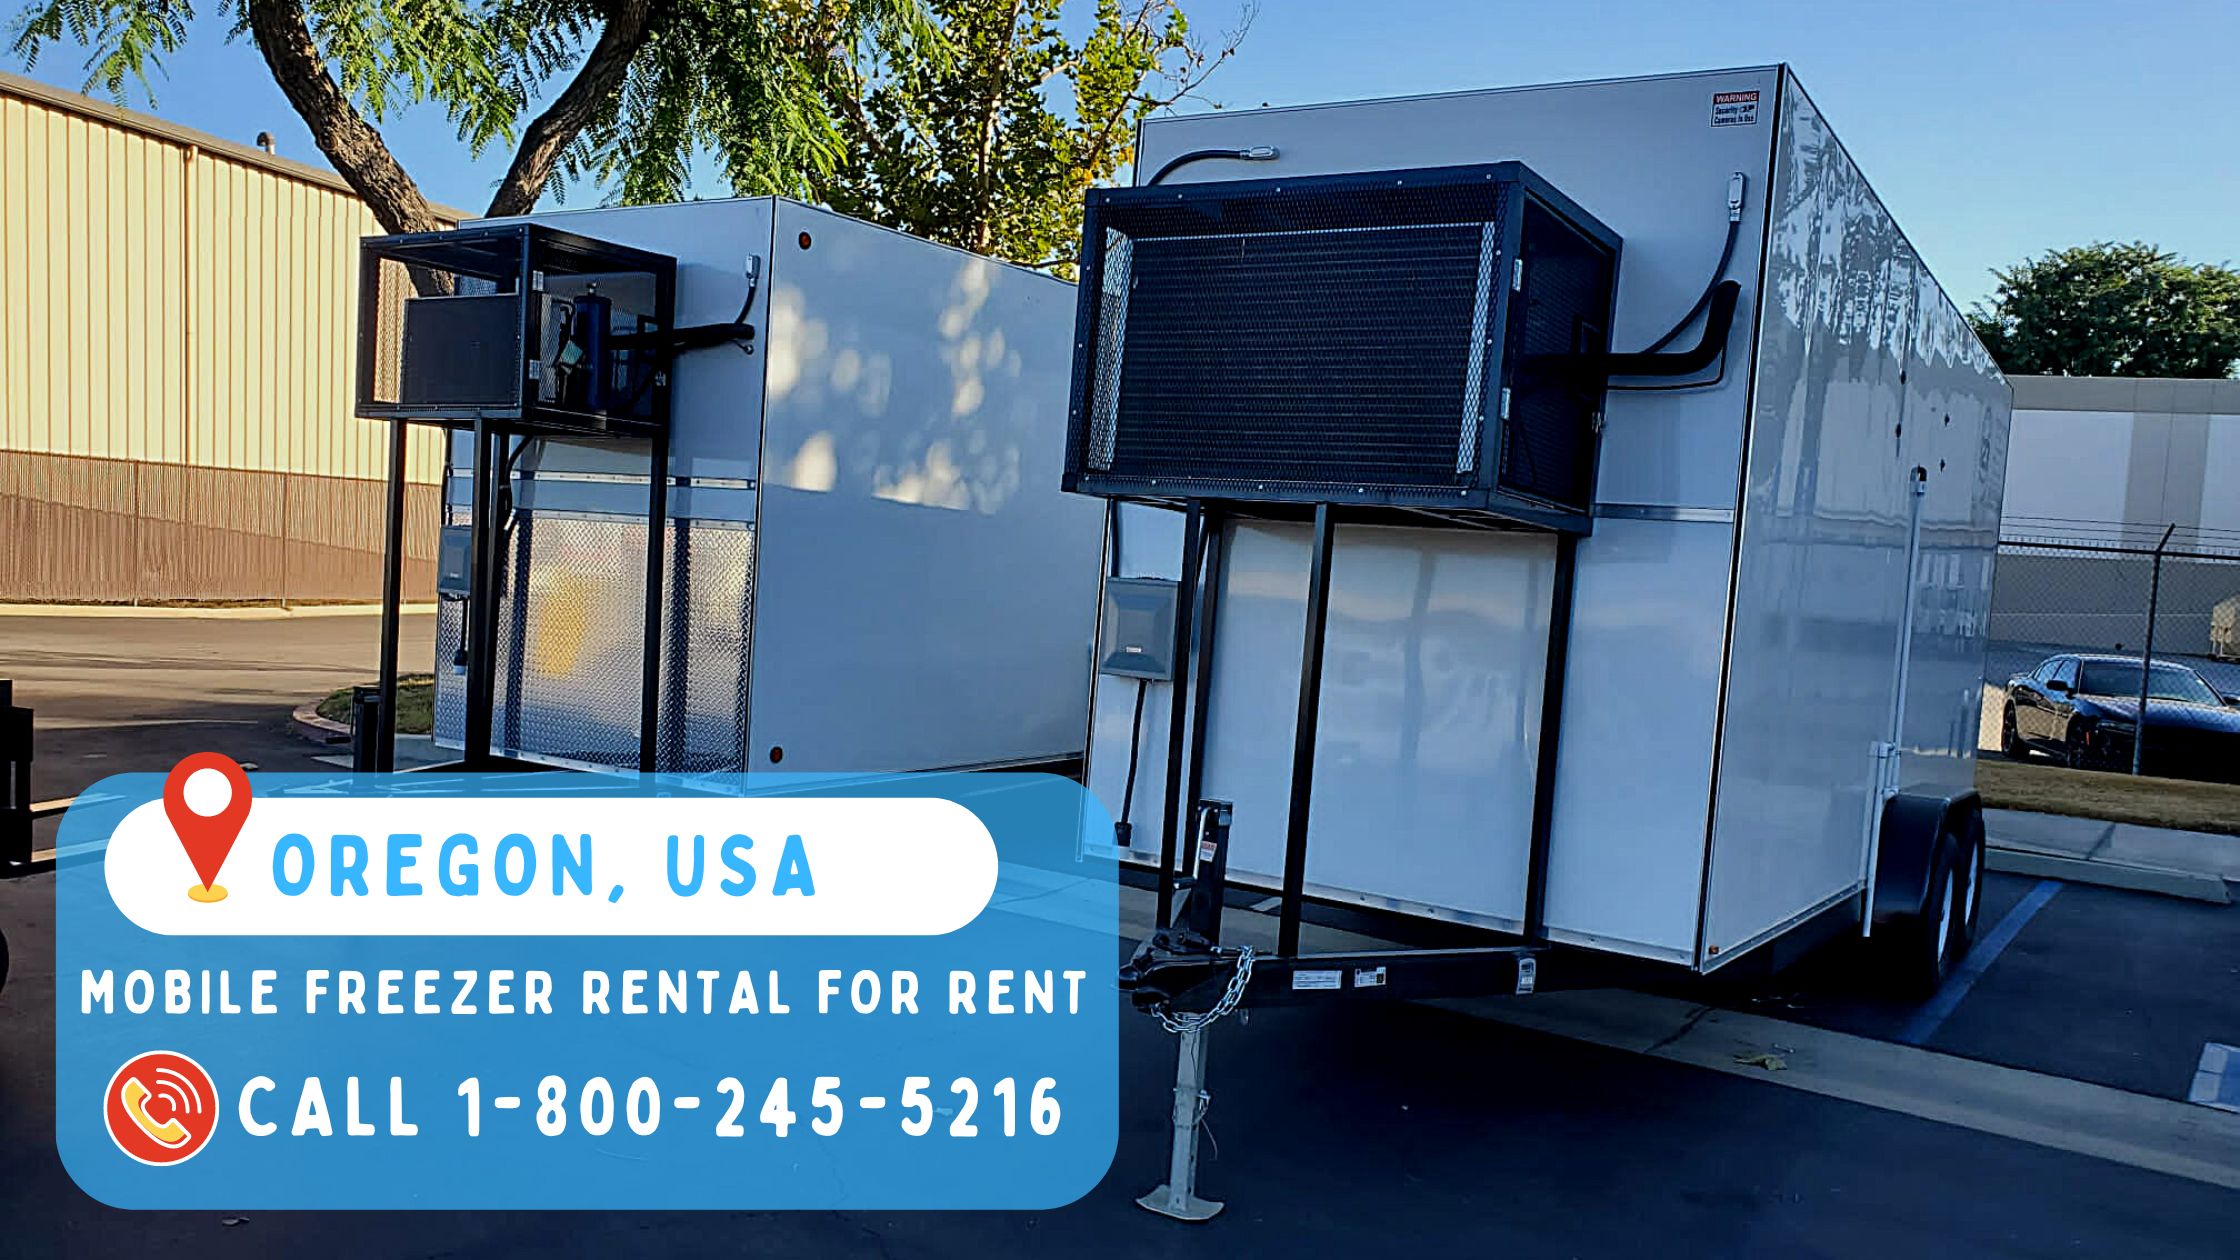 Mobile freezer rental for rent in Oregon